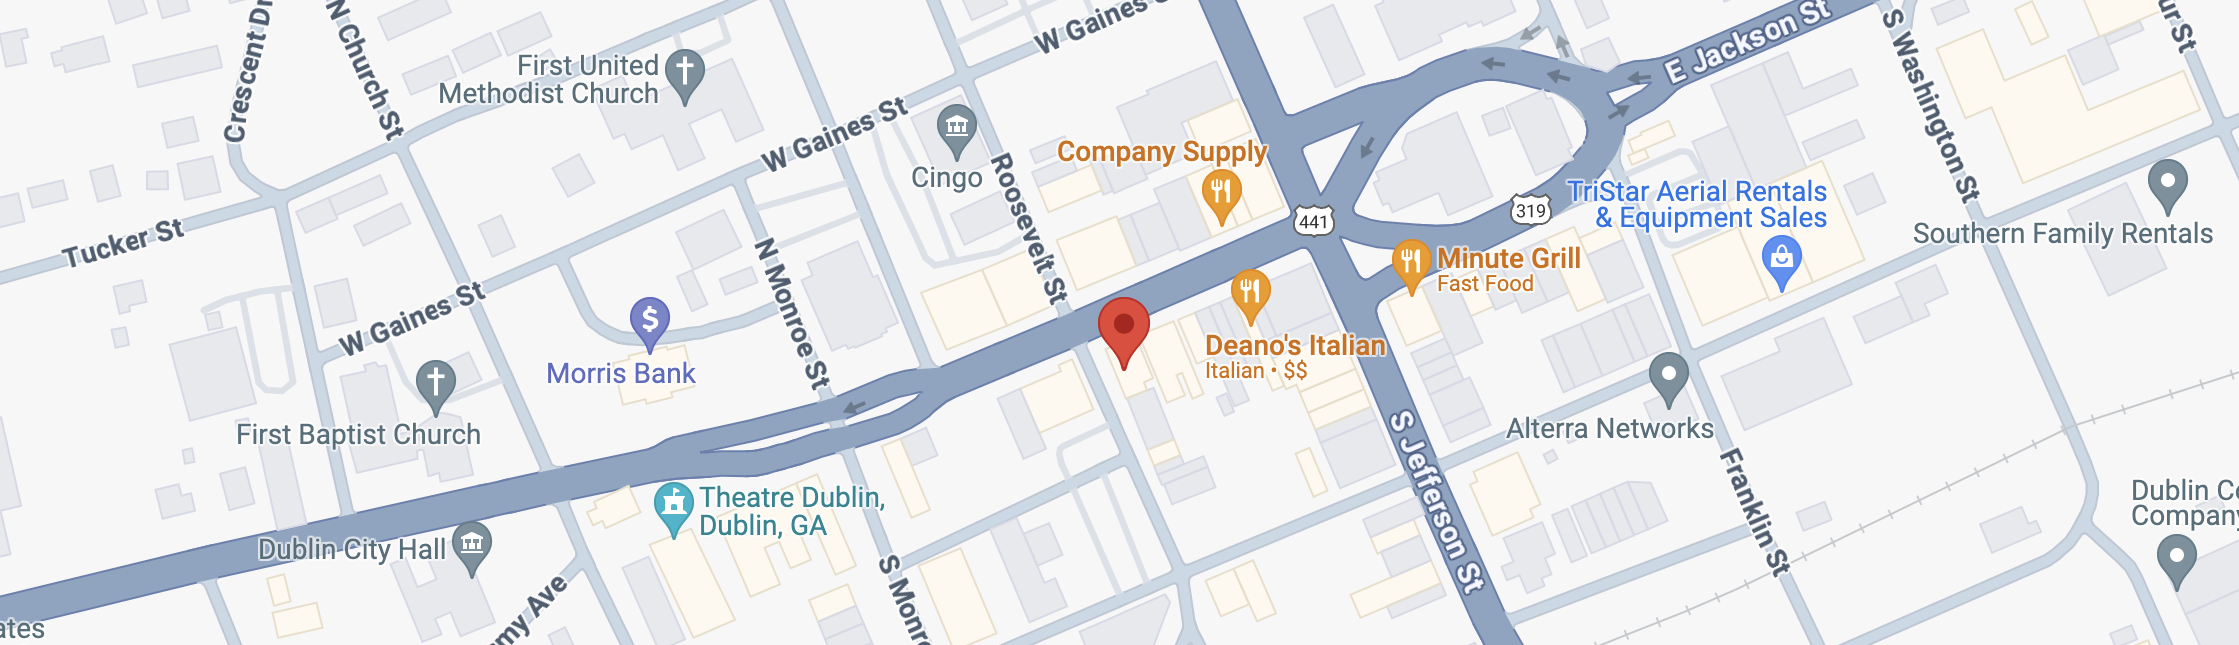 Contact Us Dublin Hero - Desktop Image